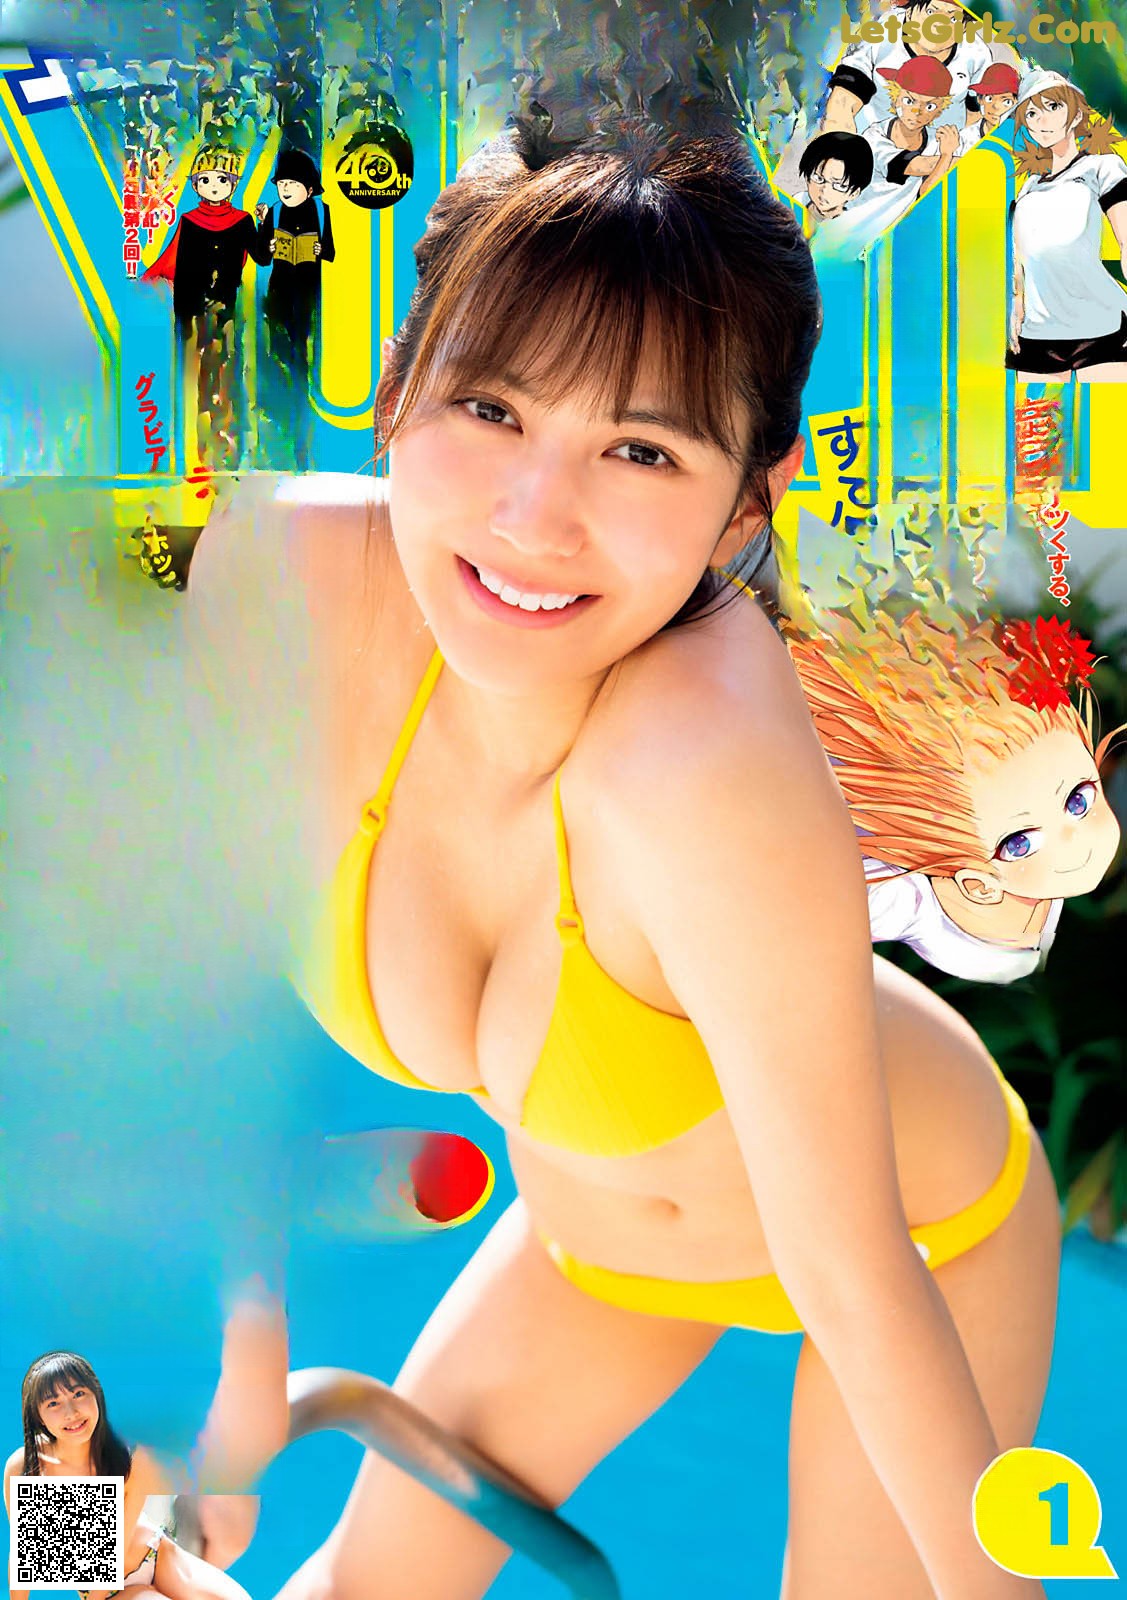 View - Haruka Arai 新井遥, Young Magazine 2021 No.01 (ヤングマガジン 2021年01号) - ArtXGirl.com